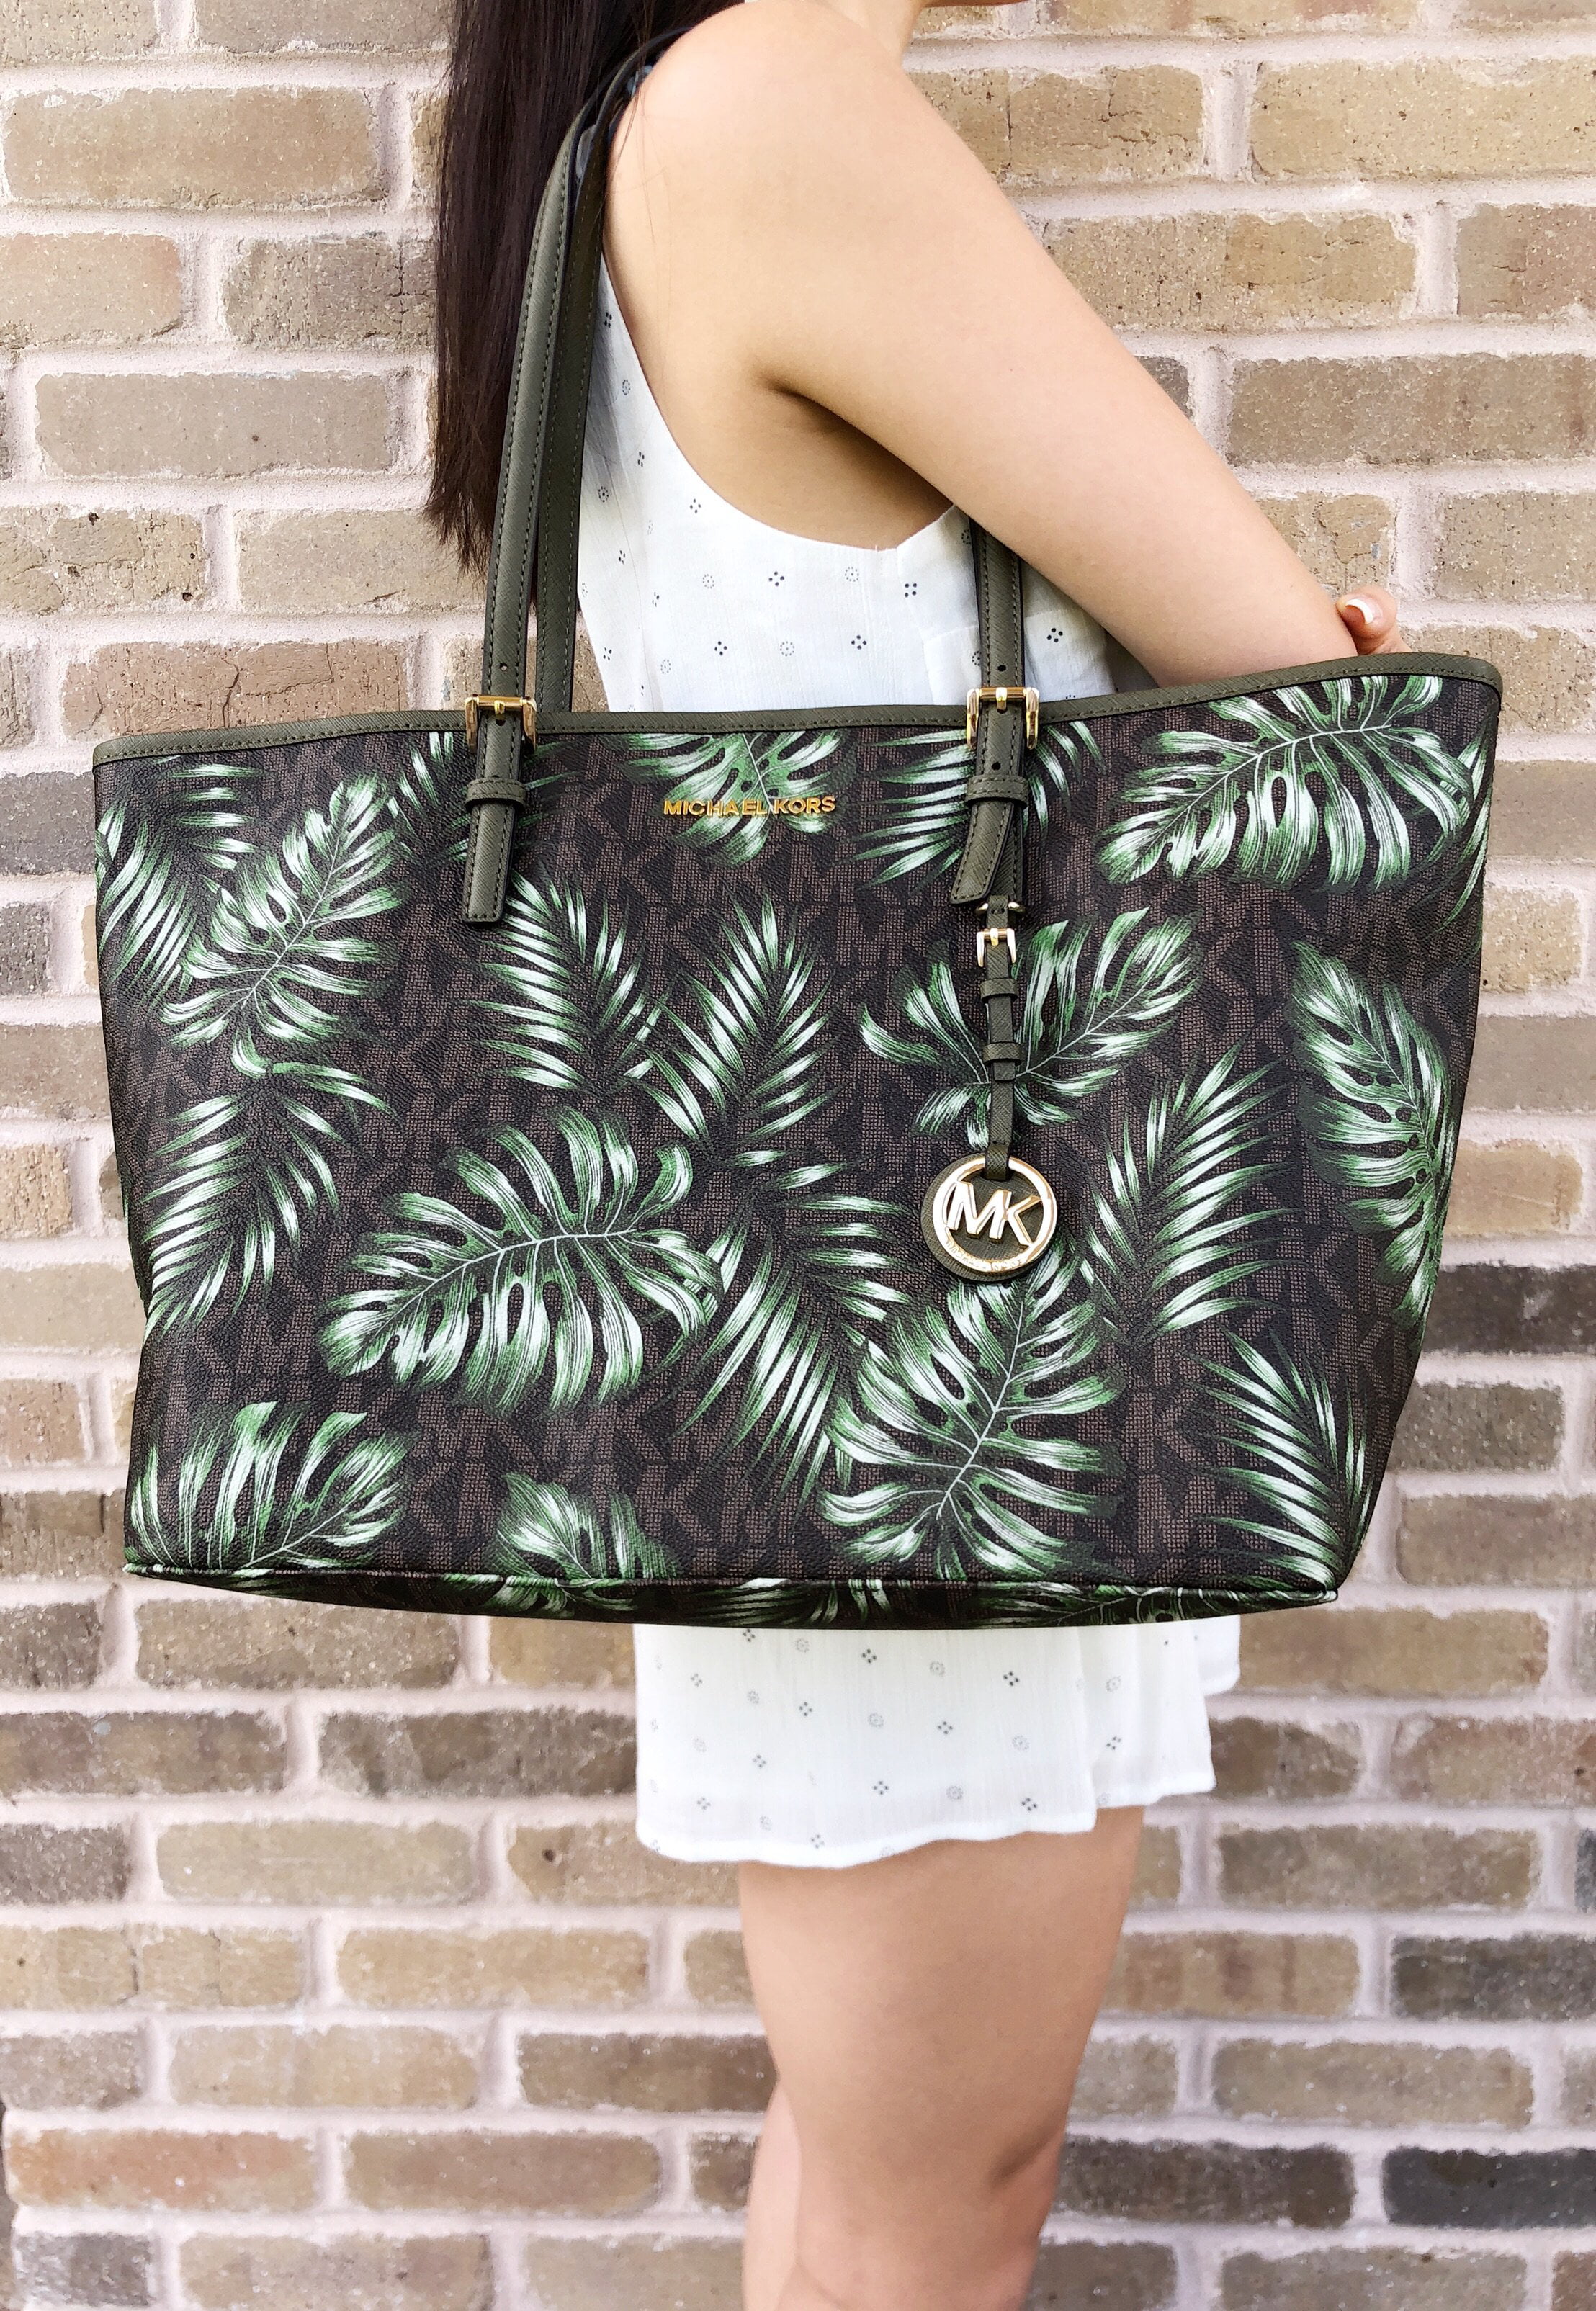 michael kors palm leaf purse